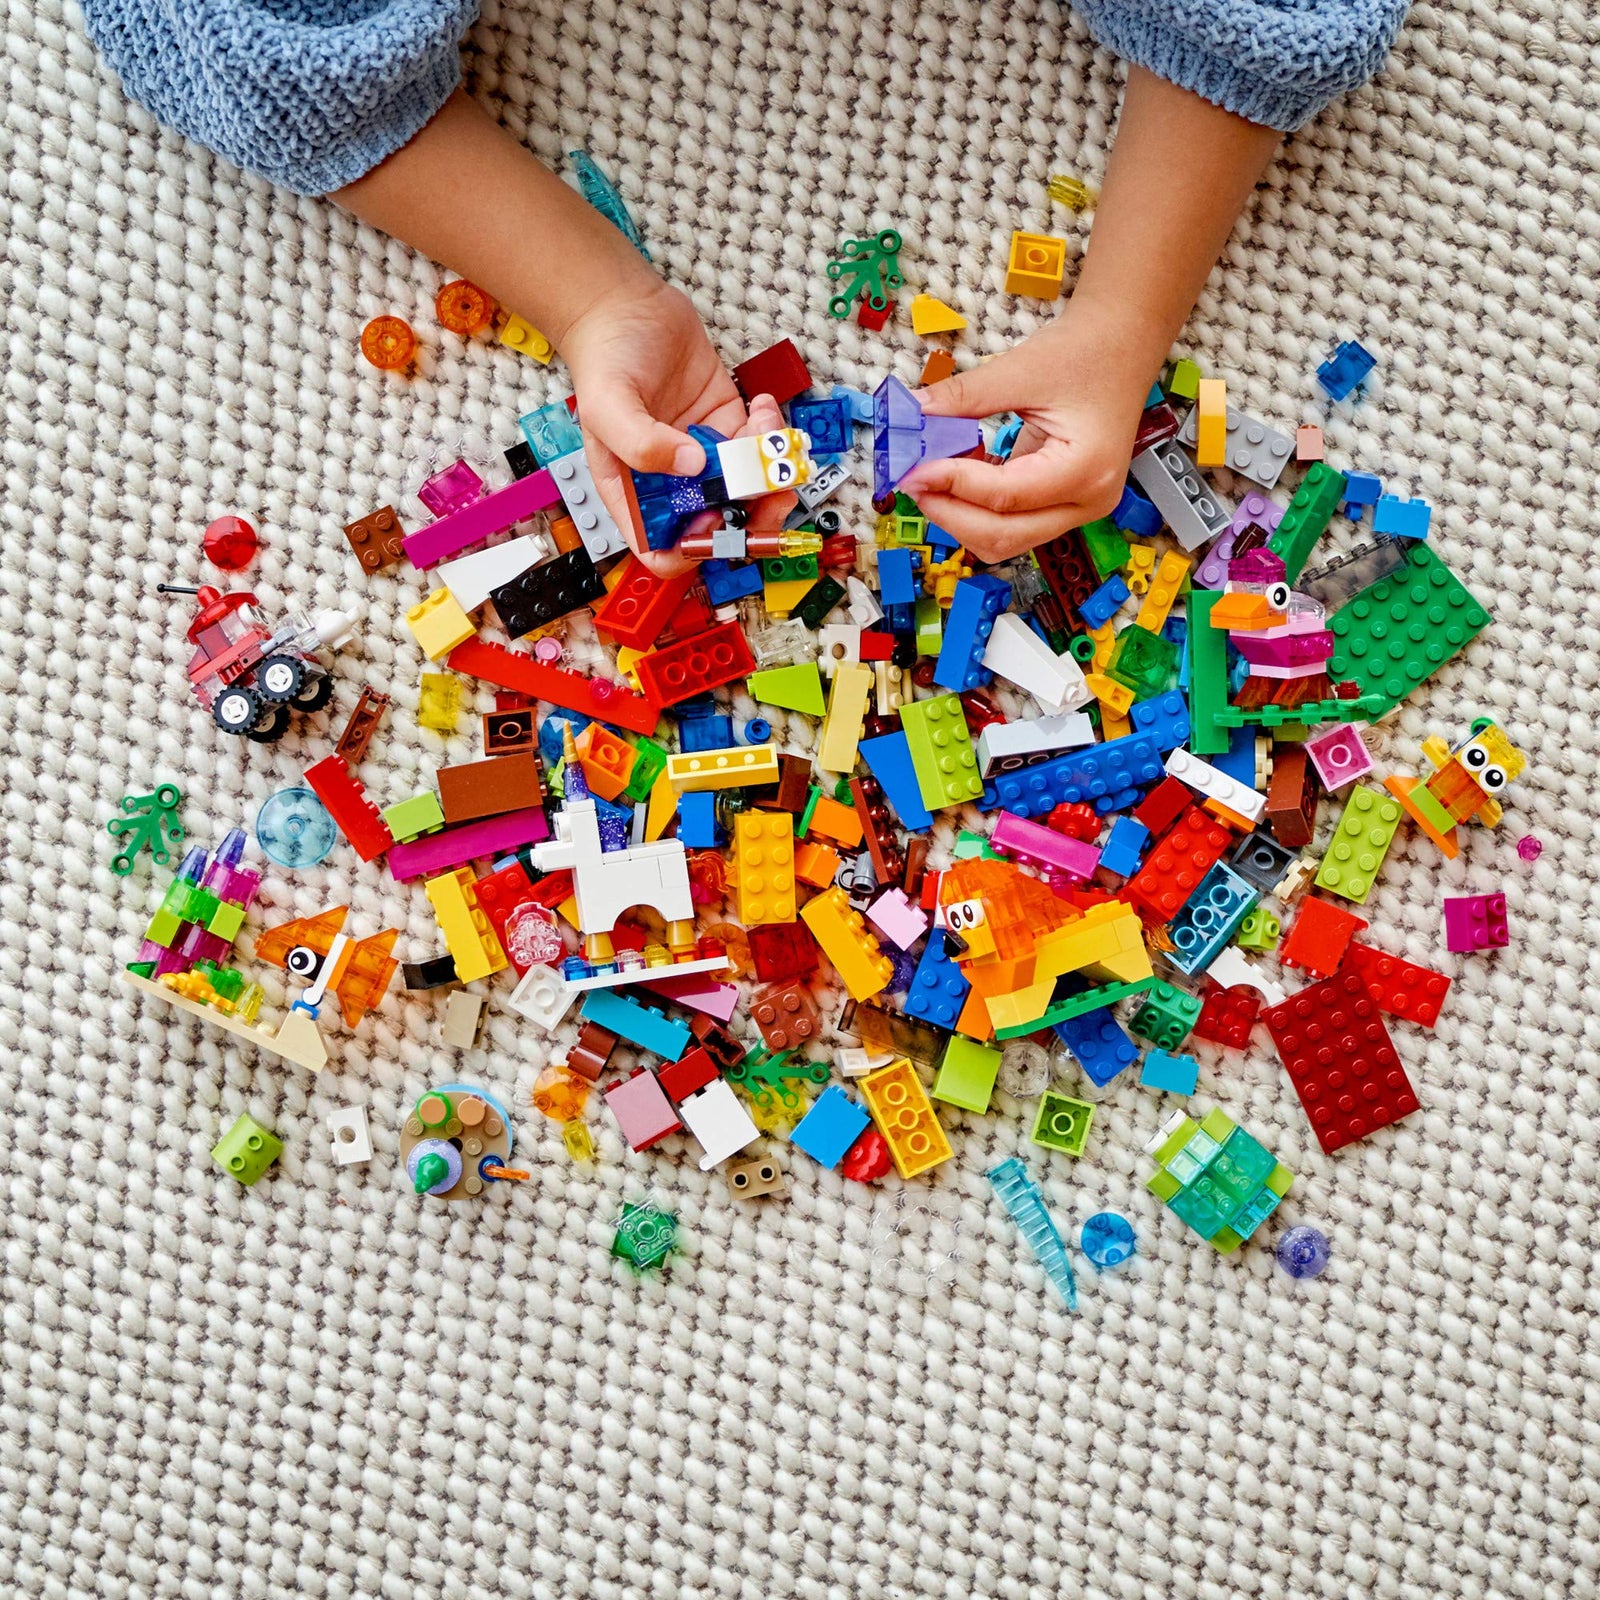 LEGO Classic Creative Transparent Bricks 11013 Building Kit with Transparent Bricks; Inspires Imaginative Play, New 2021 (500 Pieces)